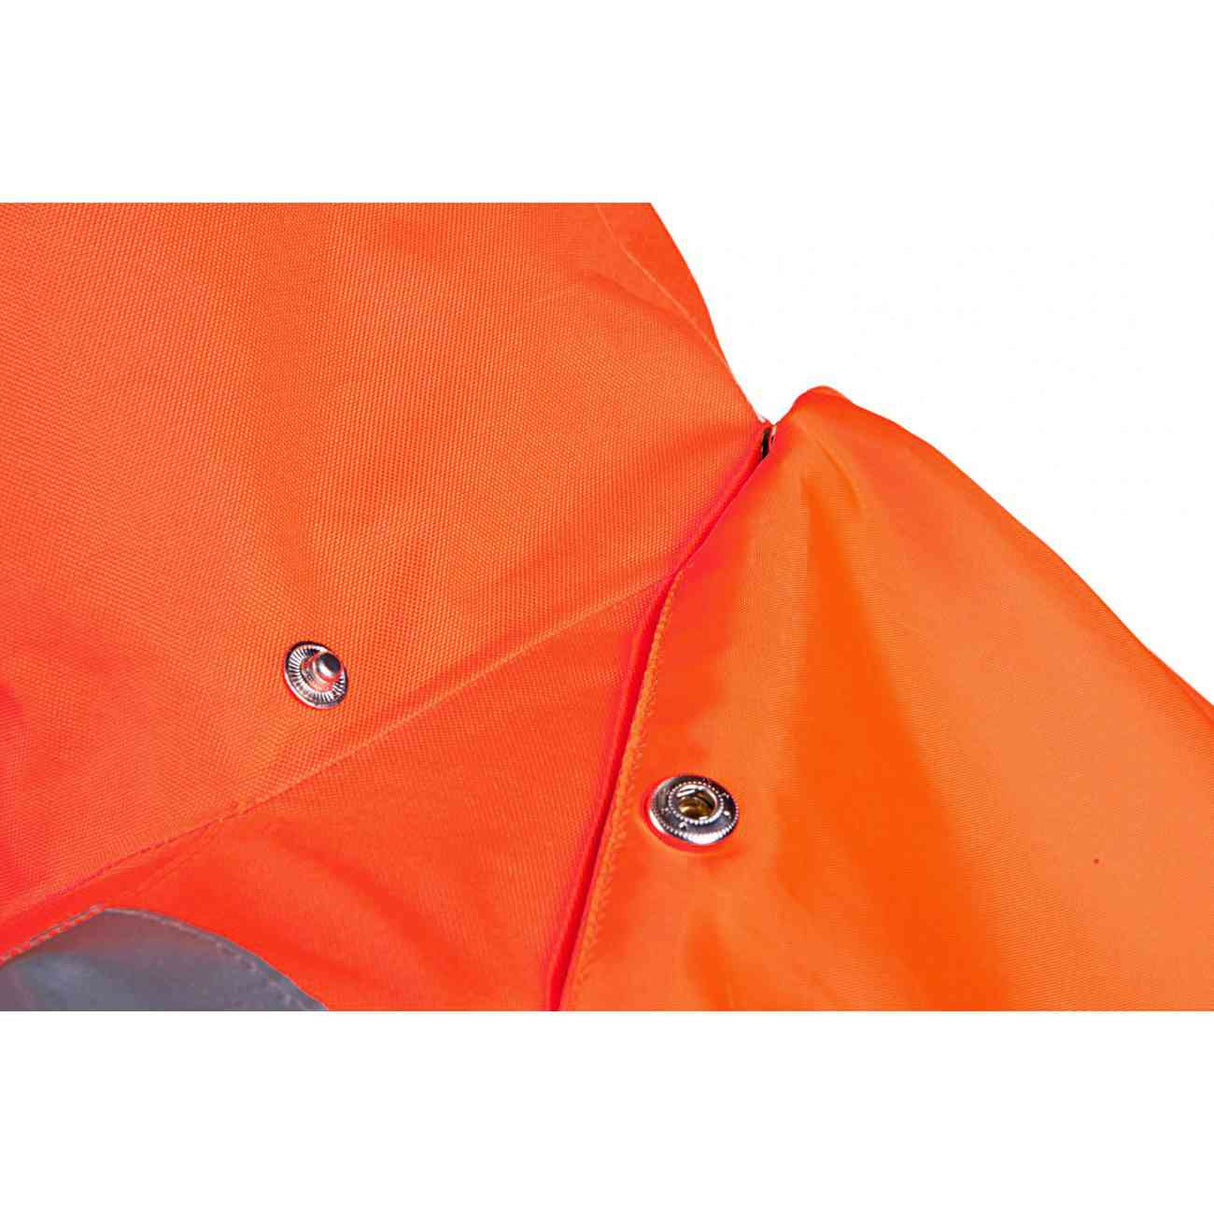 Sioen Monoco Hi-Vis Waterproof PU Coating Breathable Rain Jacket, Size - Large